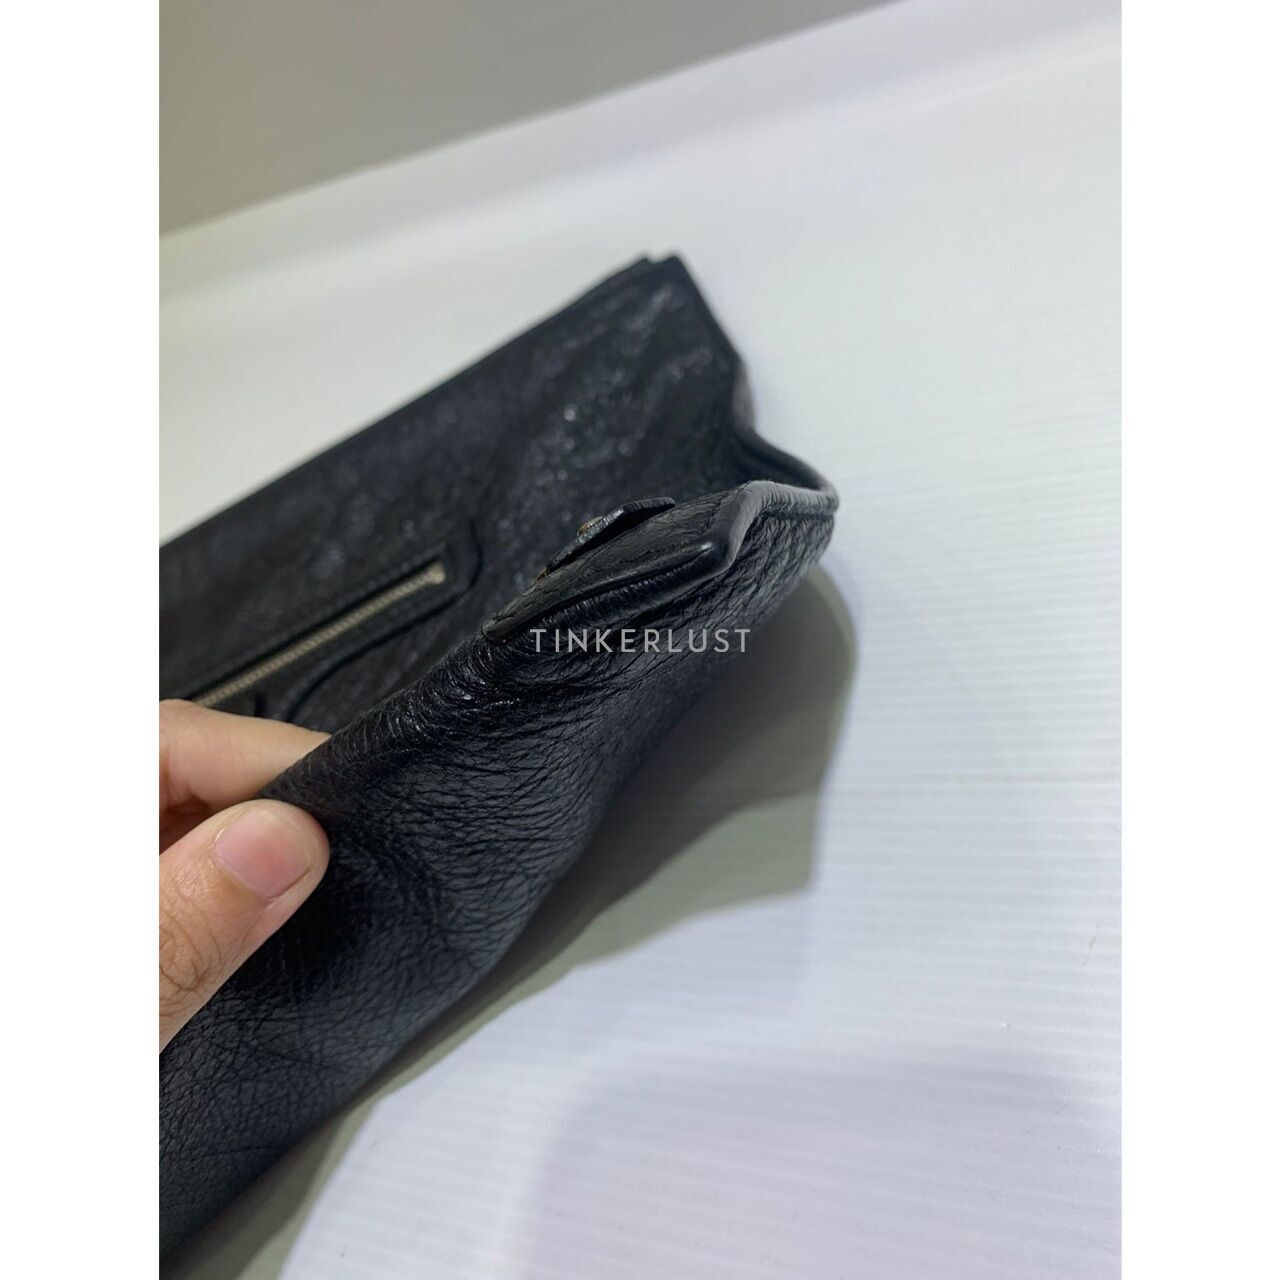 Balenciaga Classic Zip Leather Black PHW 2019 Clutch